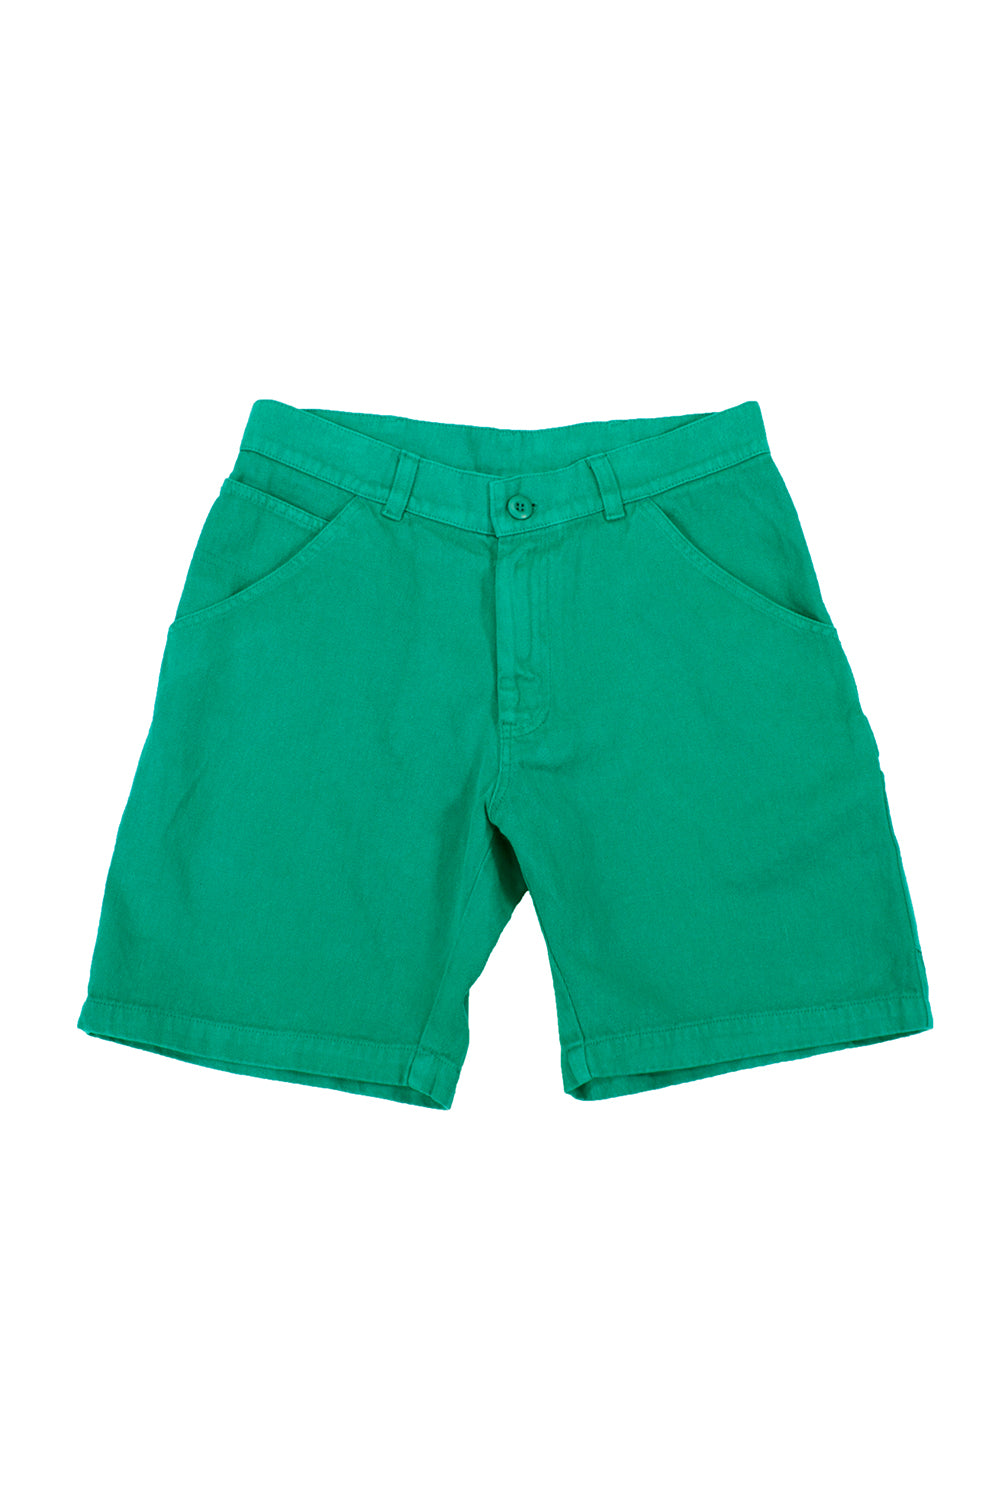 Mountain Short | Jungmaven Hemp Clothing & Accessories / Color: Jade Green